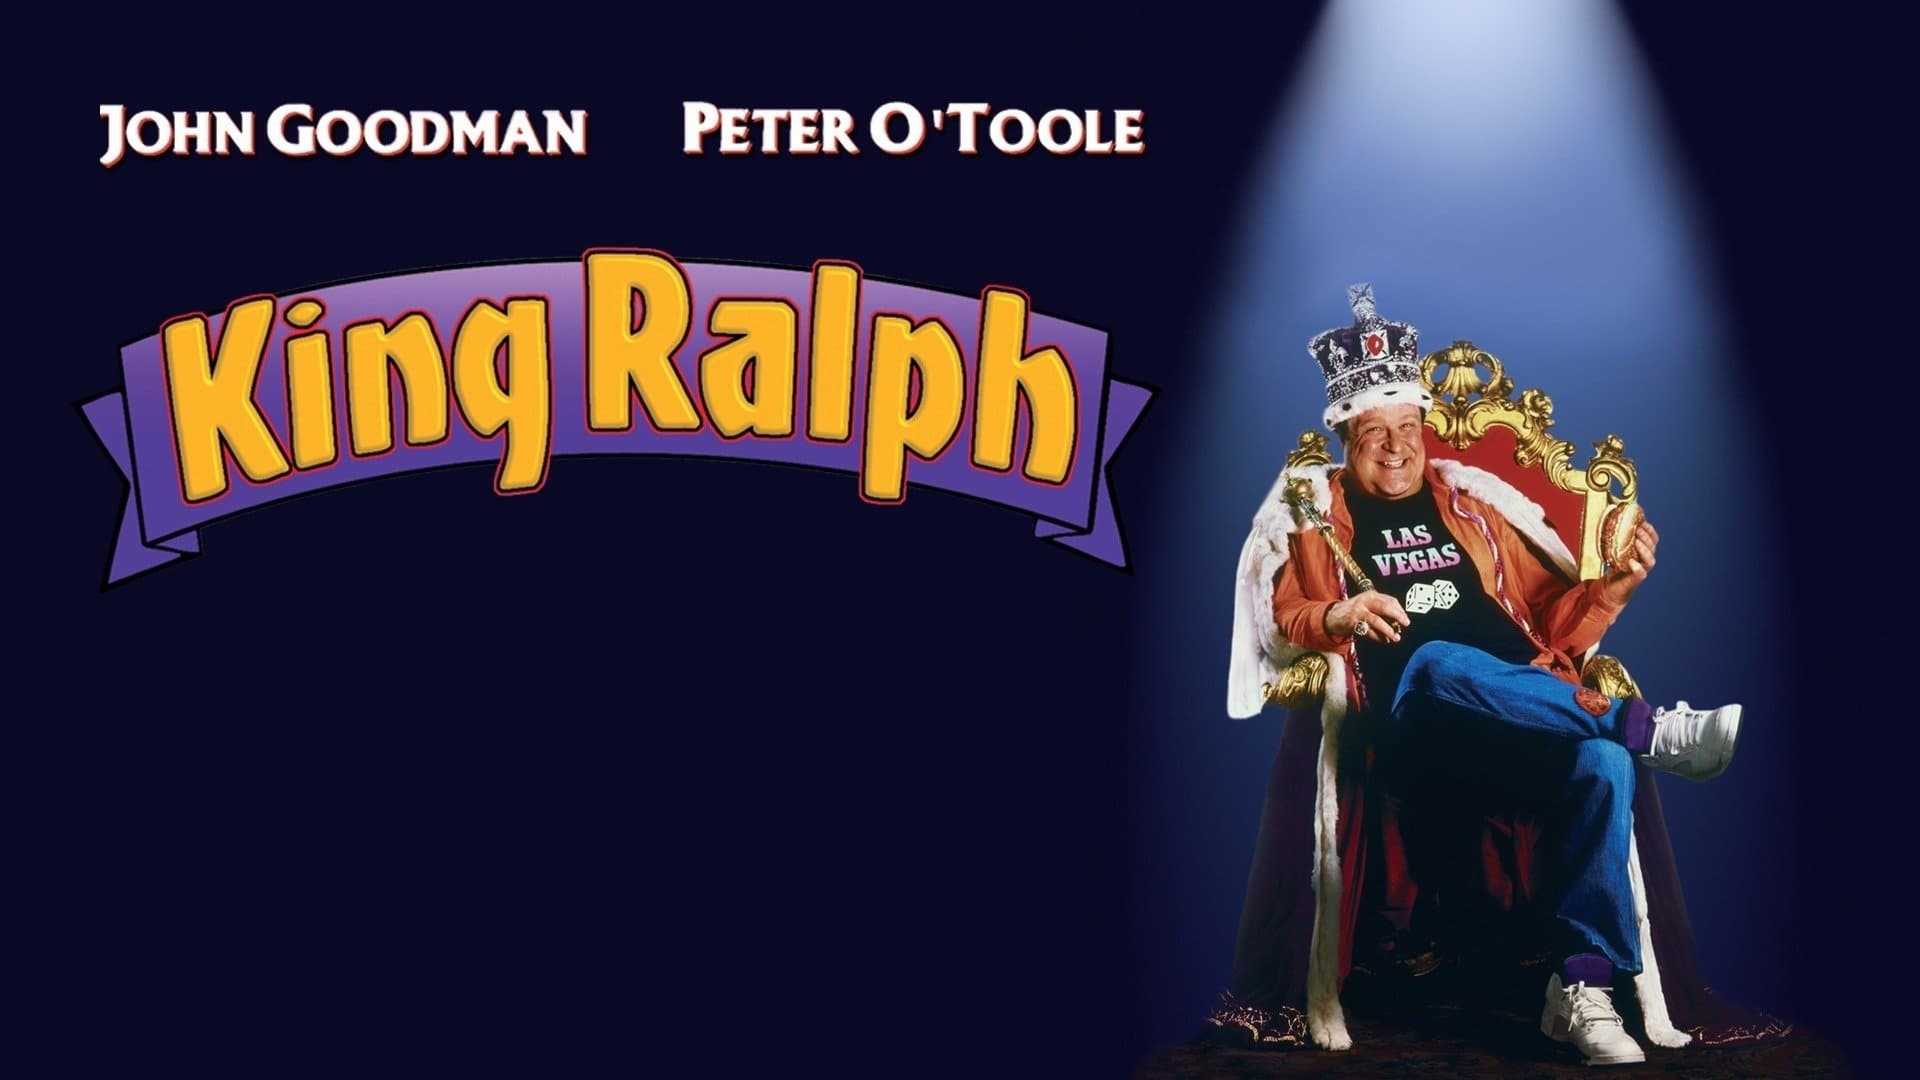 Król Ralph (1991)